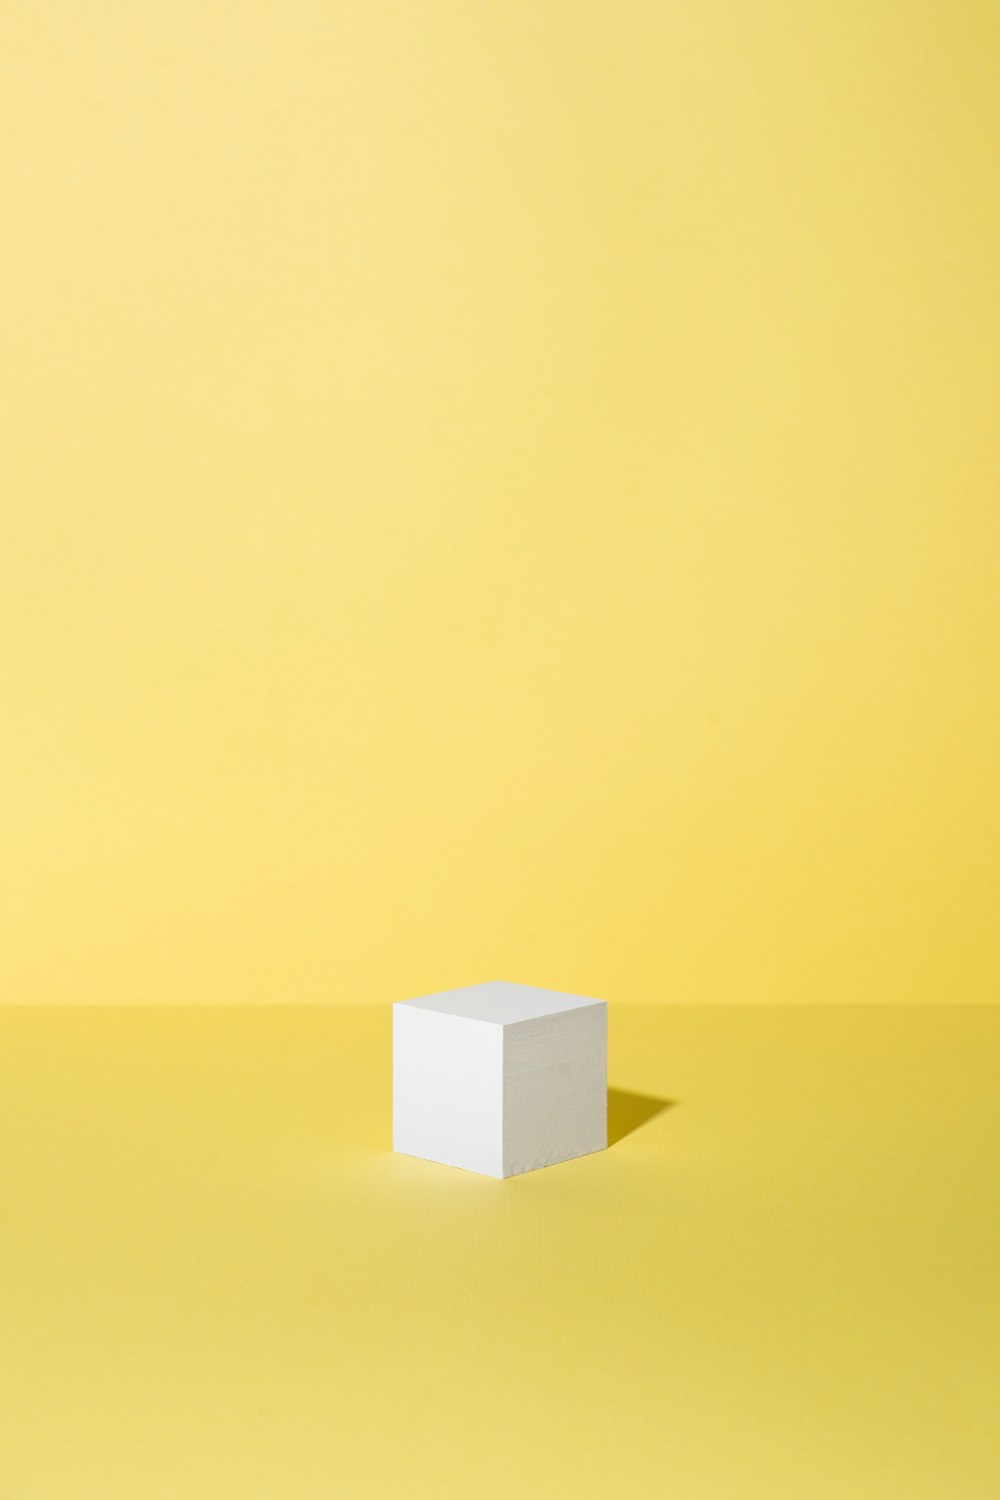 white box on yellow background photo – Free Yellow Image on Unsplash